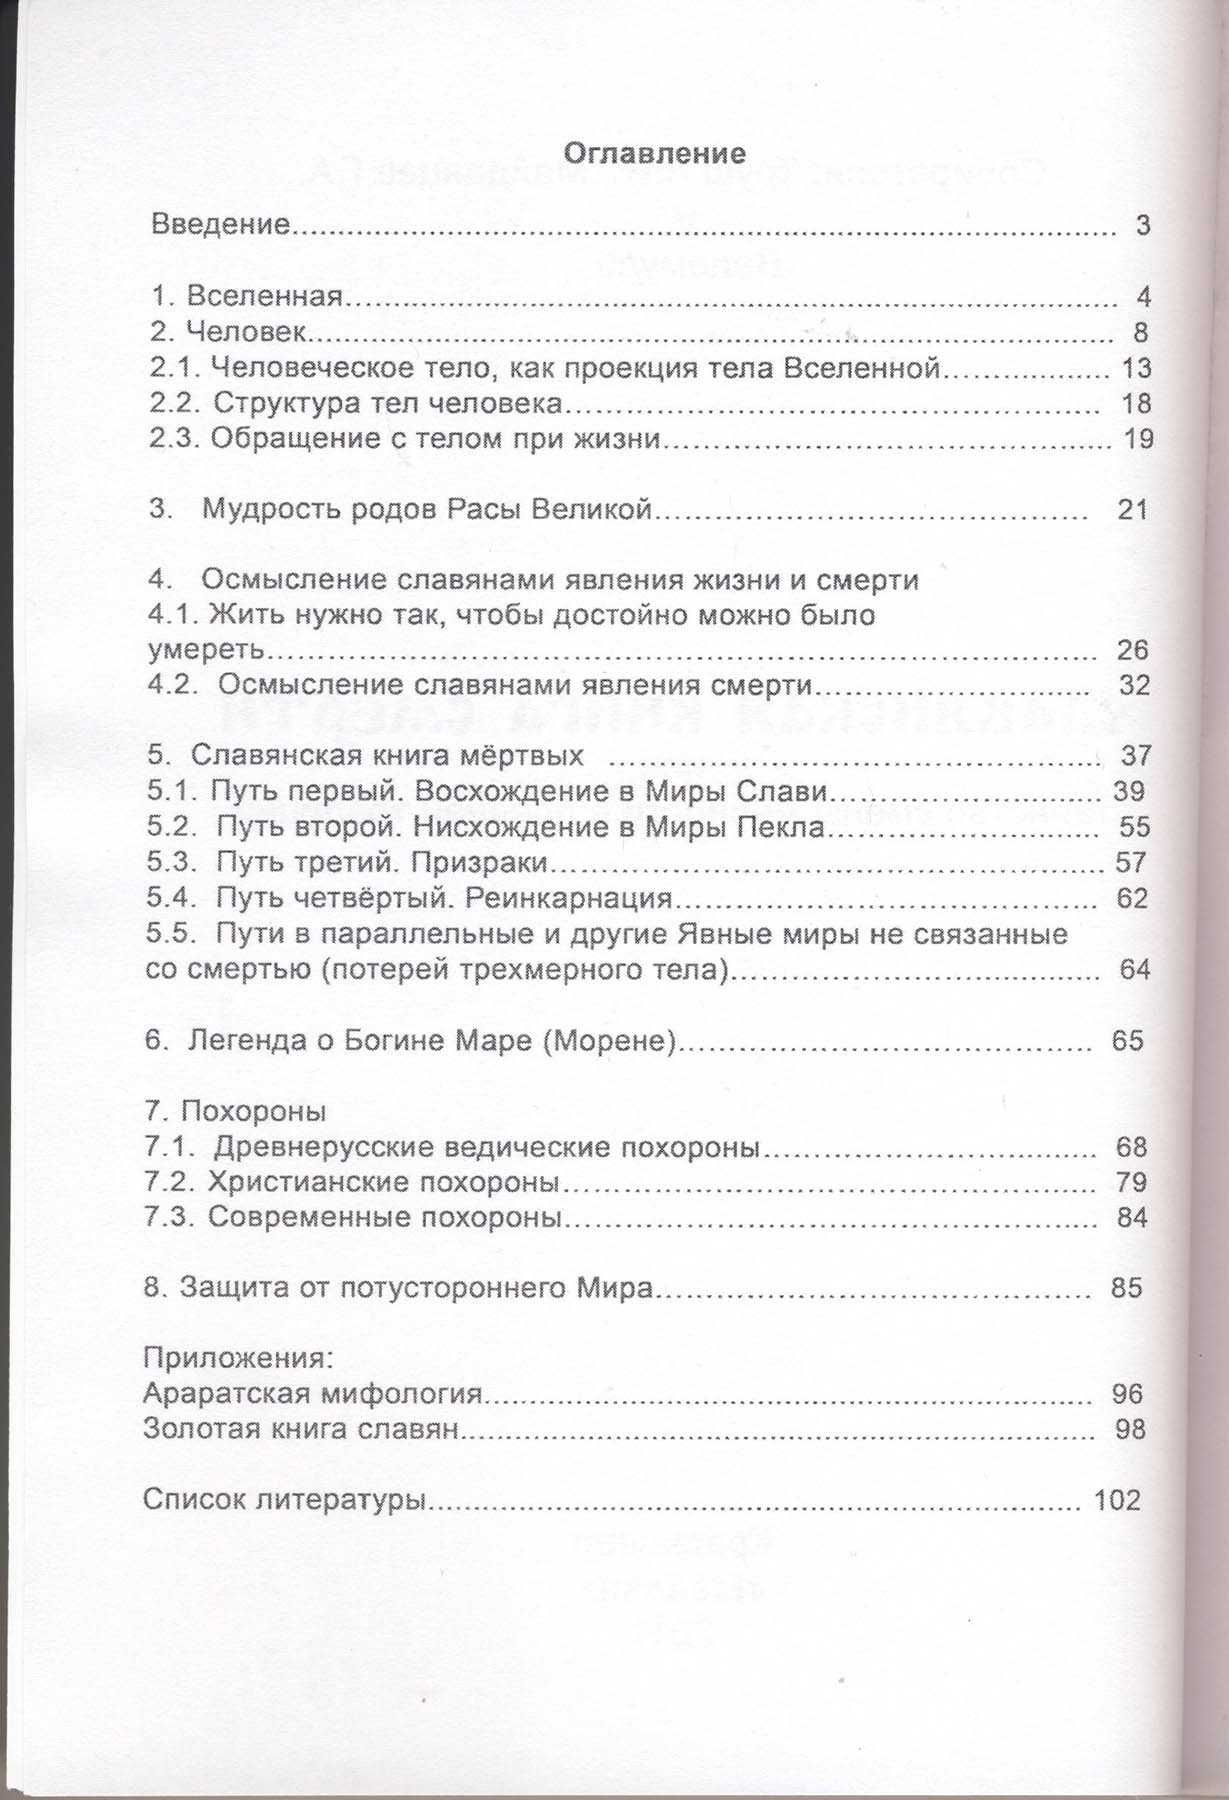 Труш А.Н. (Велемудр), Майданцев Г.А. (Яросвет), 2 книги